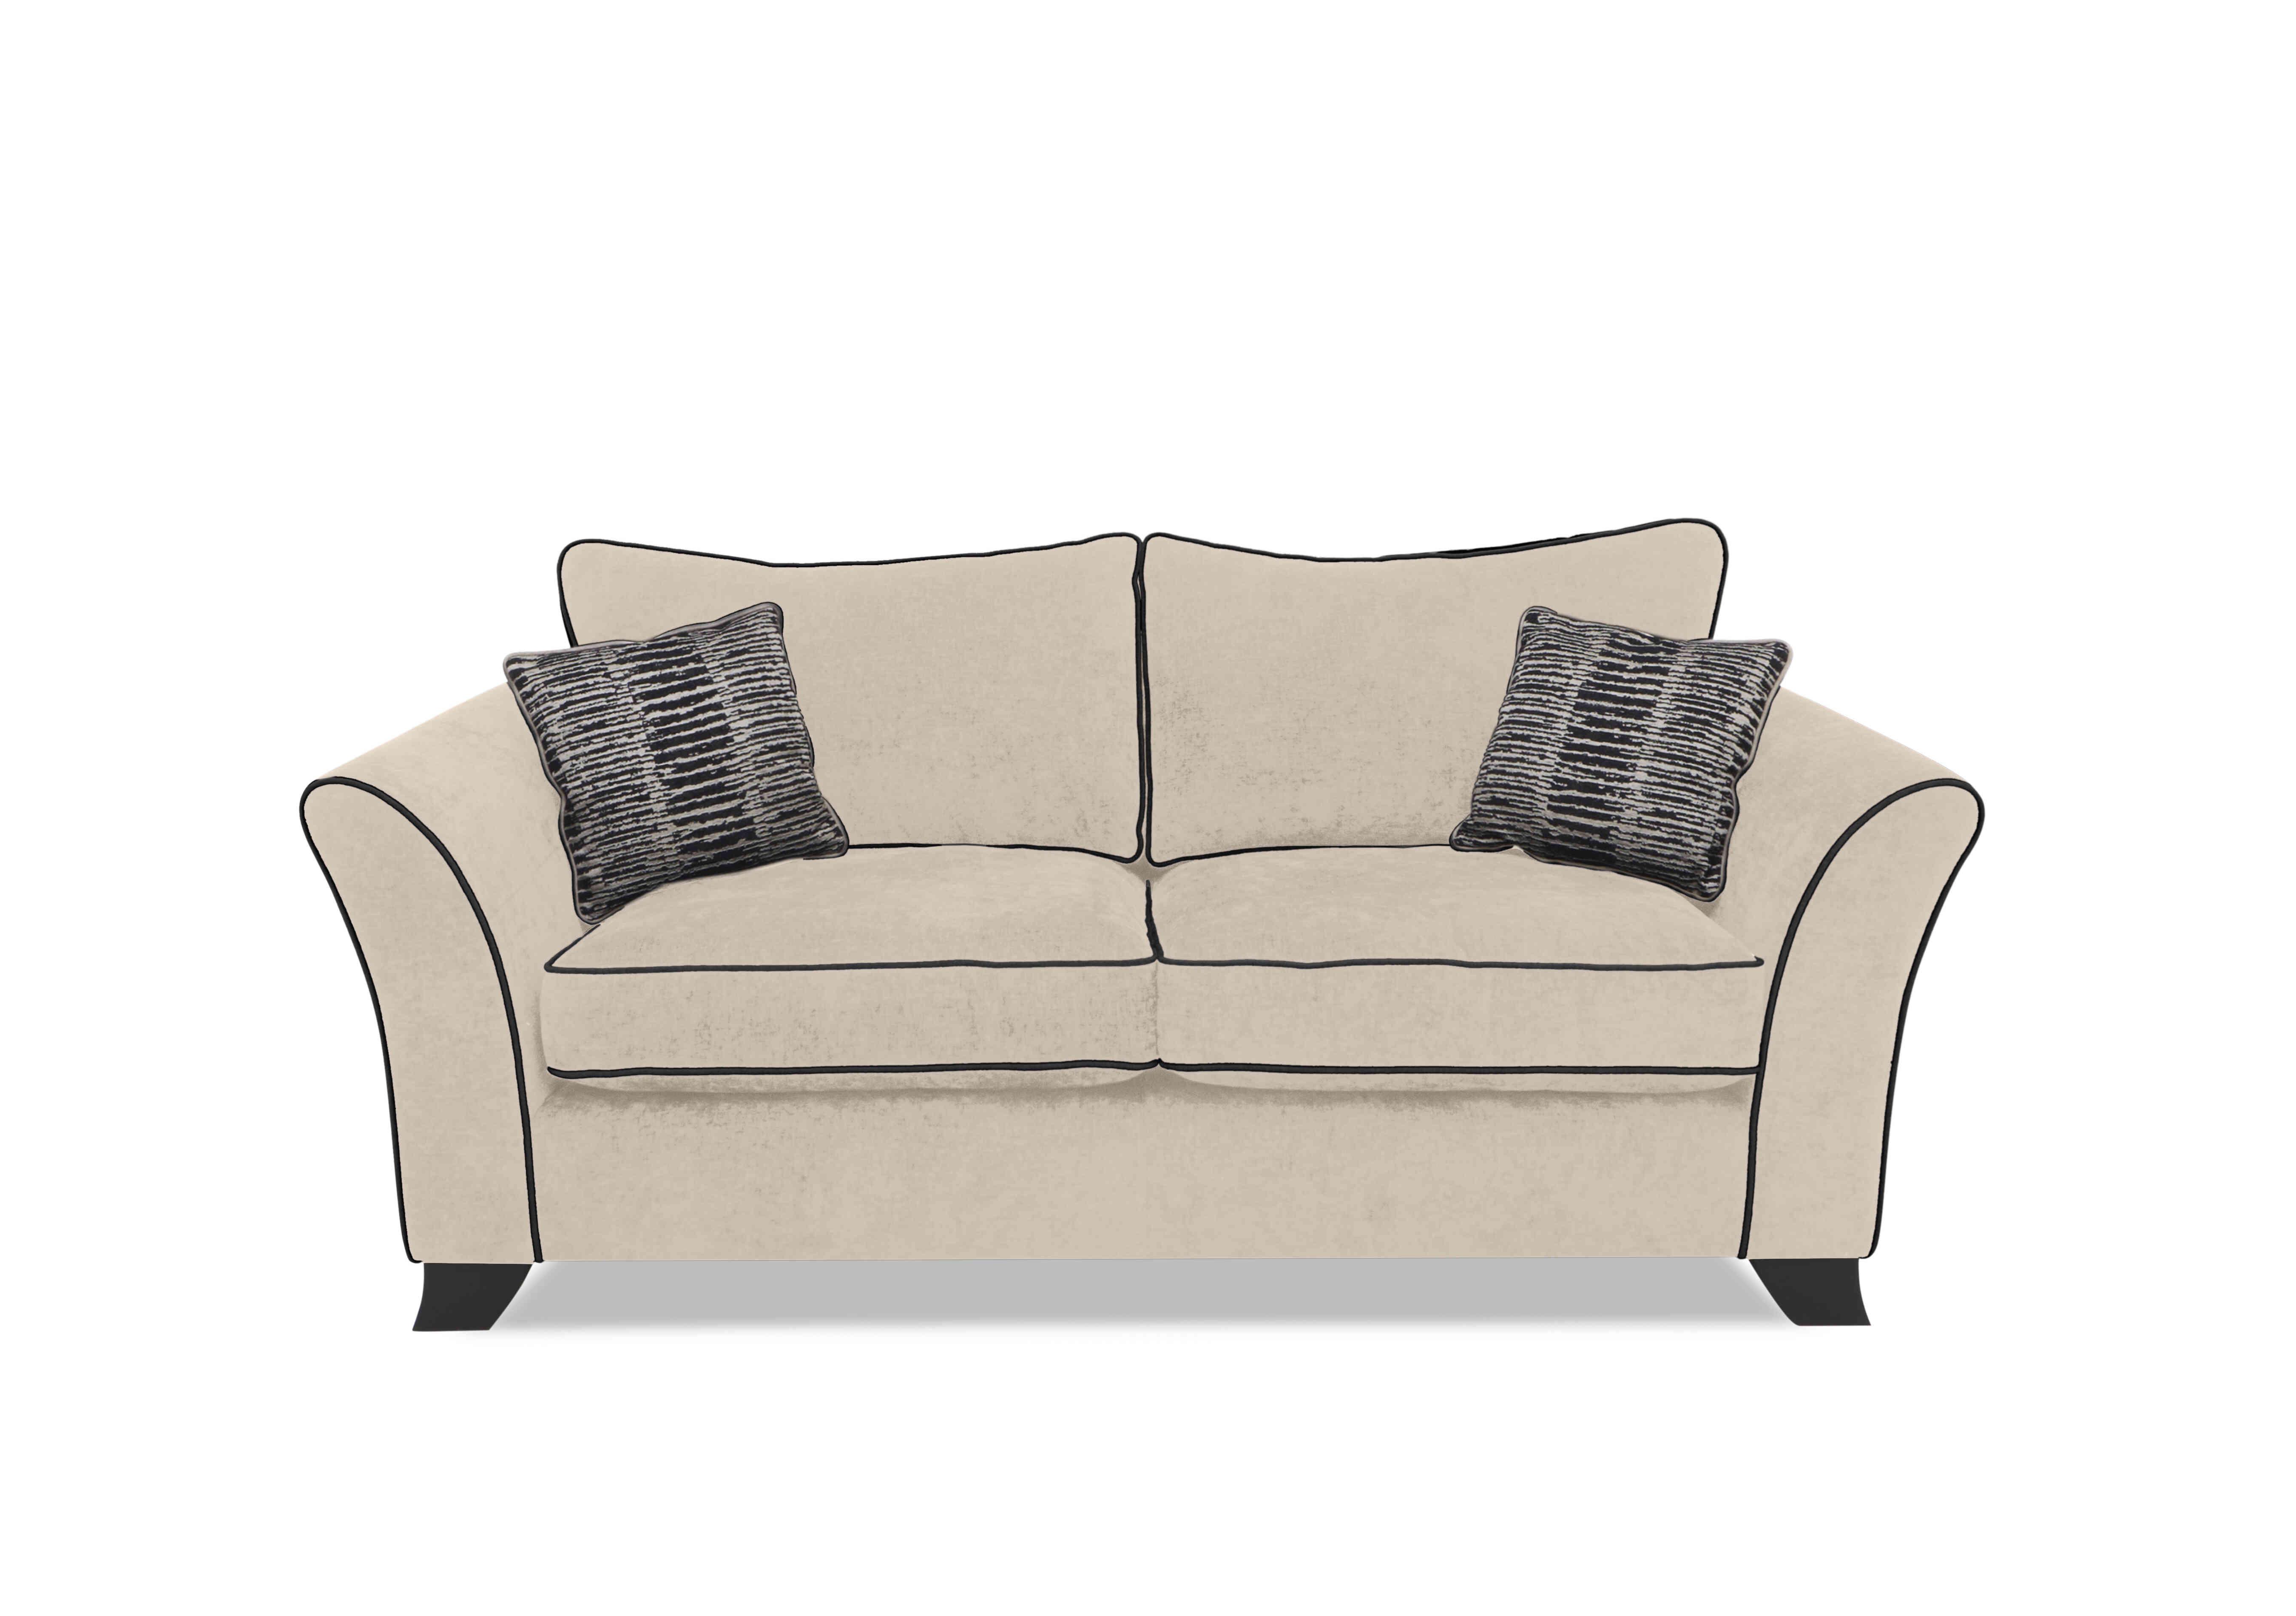 Stellar 3 Seater Classic Back Sofa Bed in Bolero Eggshell Contrast on Furniture Village